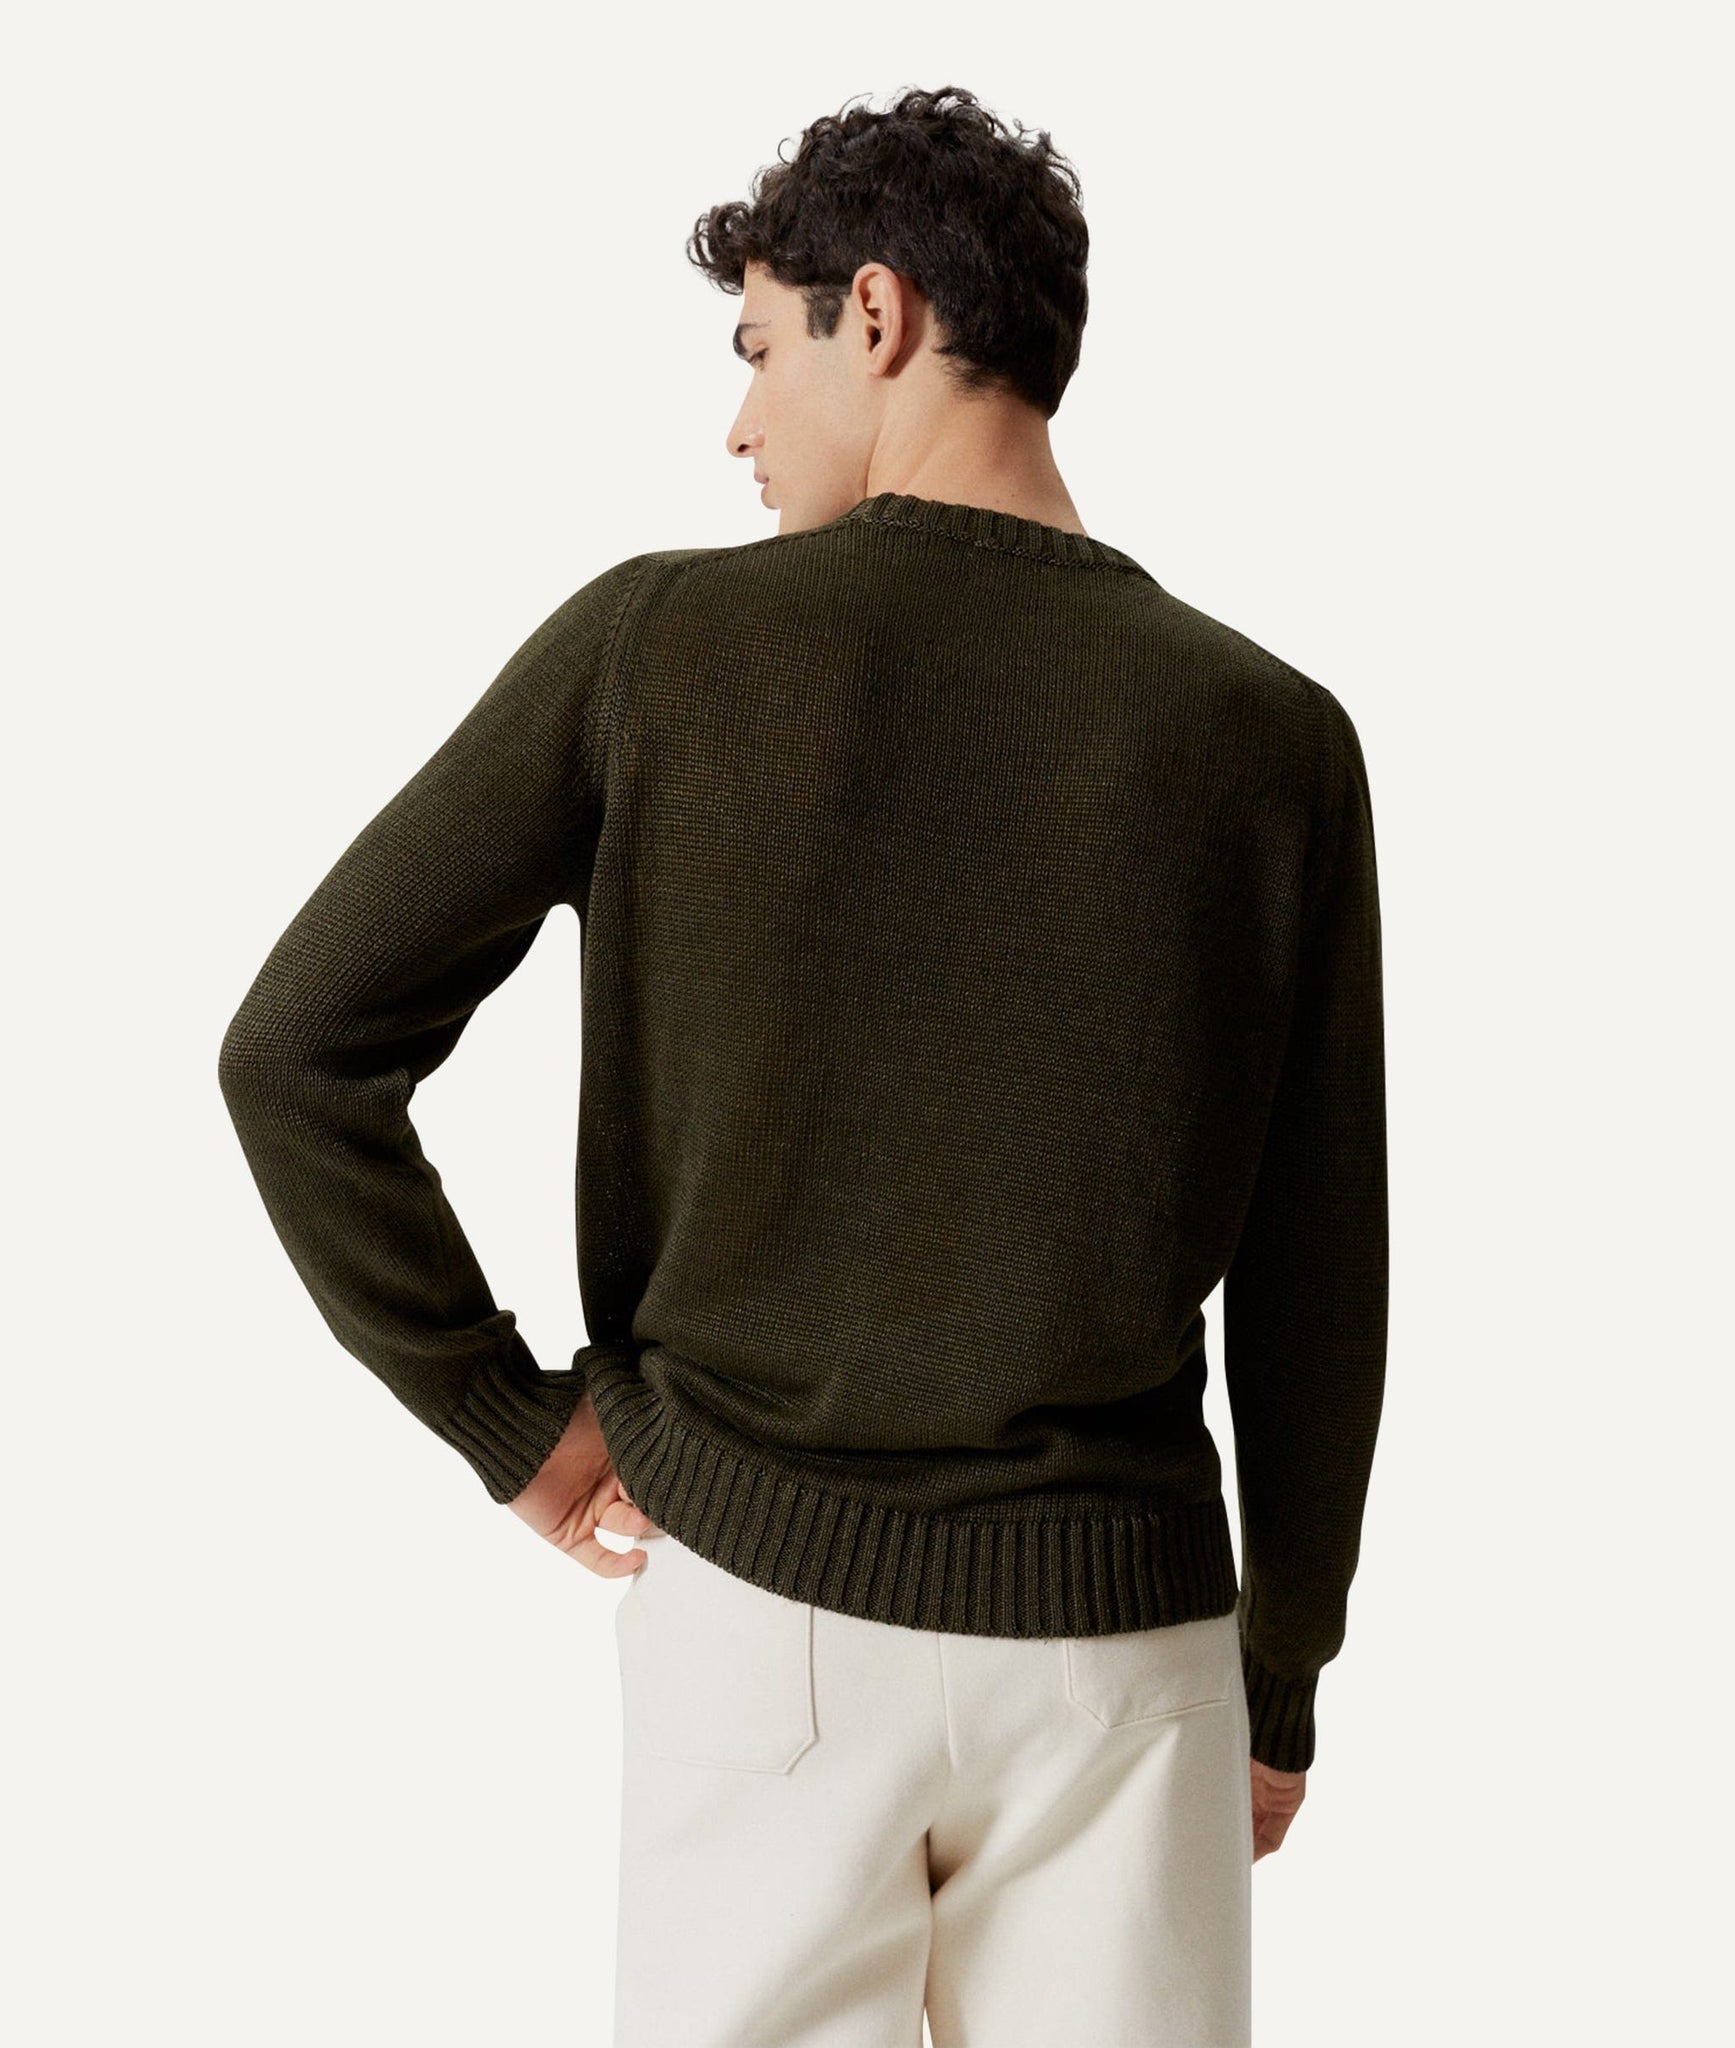 The Pure Linen Crewneck Sweater